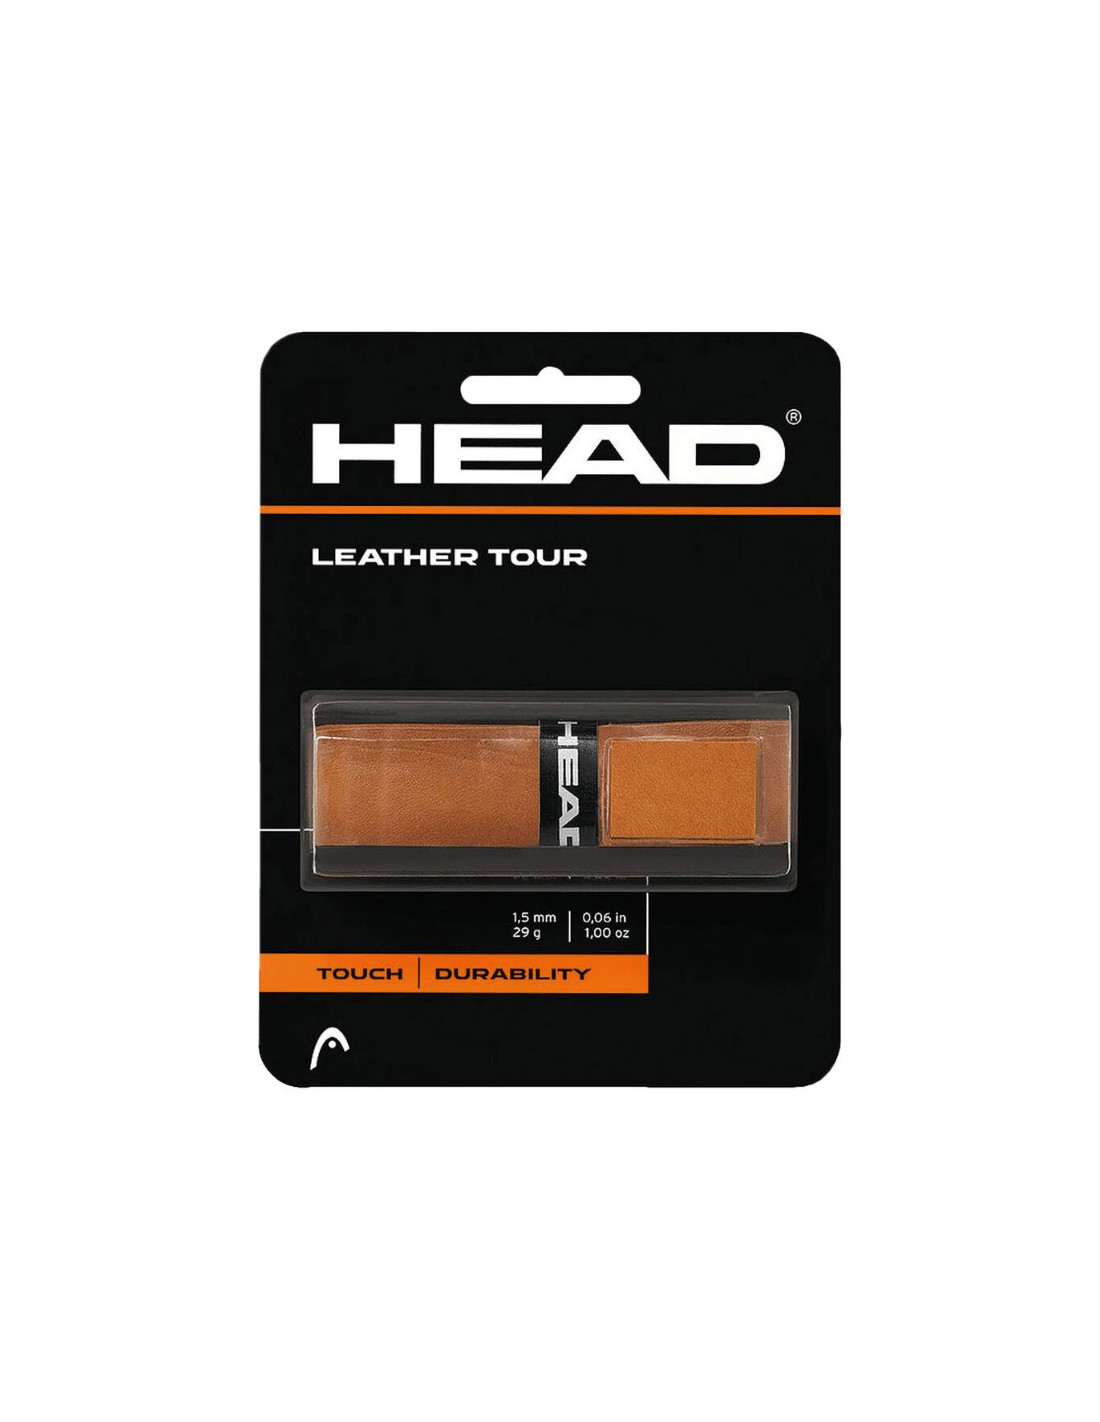 Leather Tour – HEAD